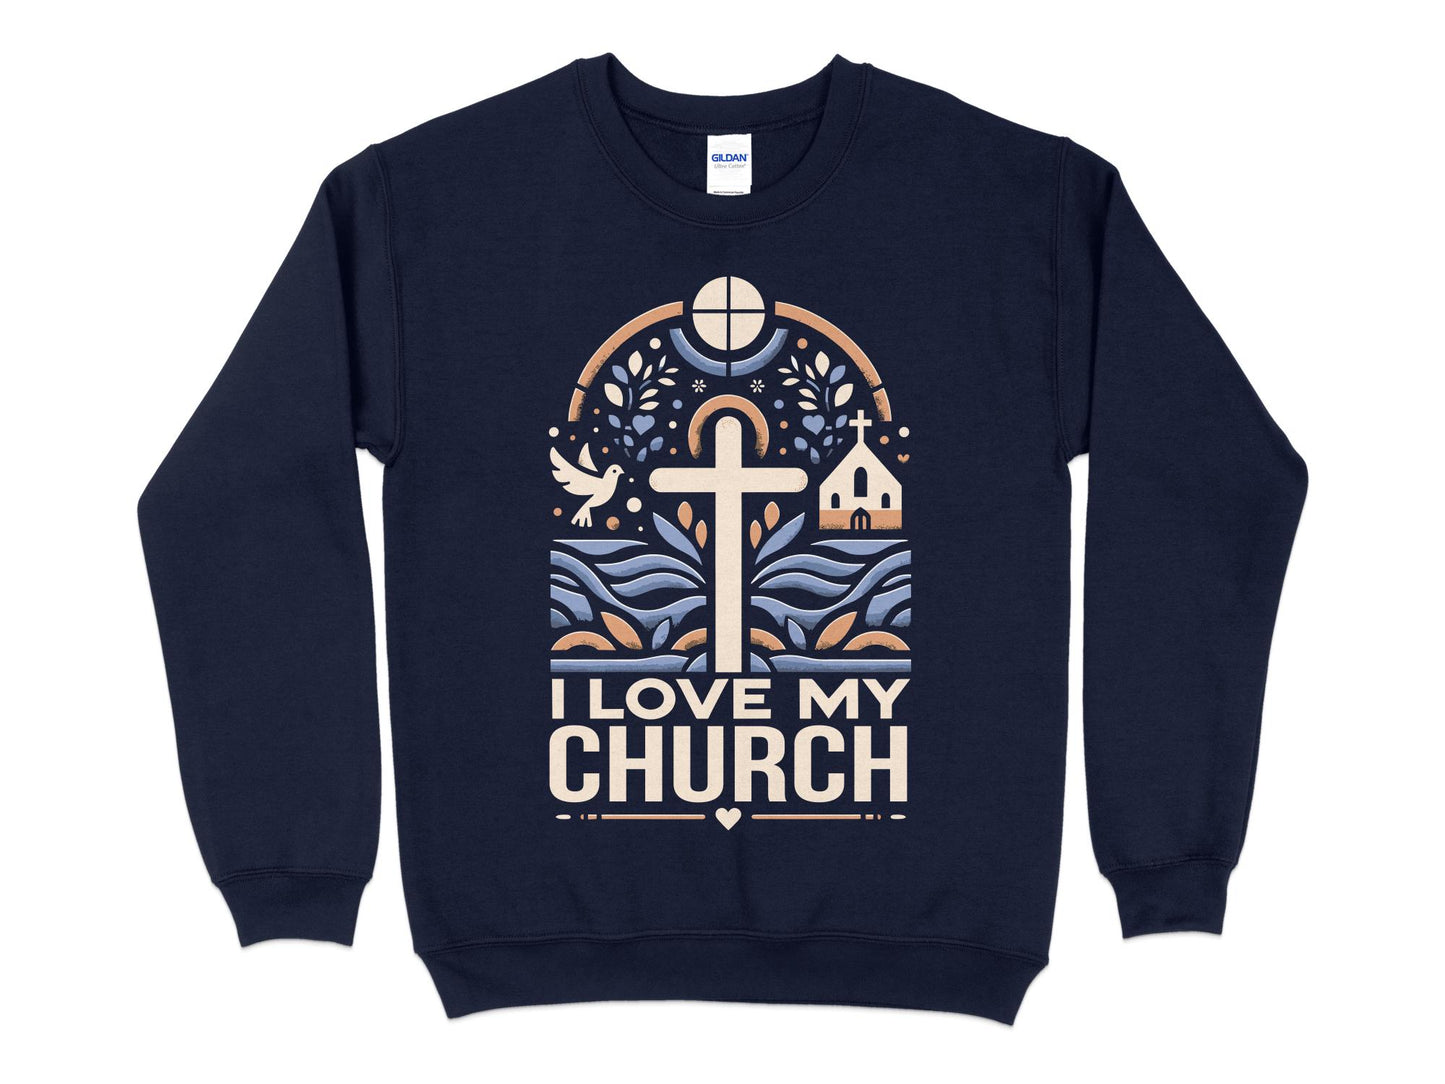 I Love My Church Sweatshirt, navy blue